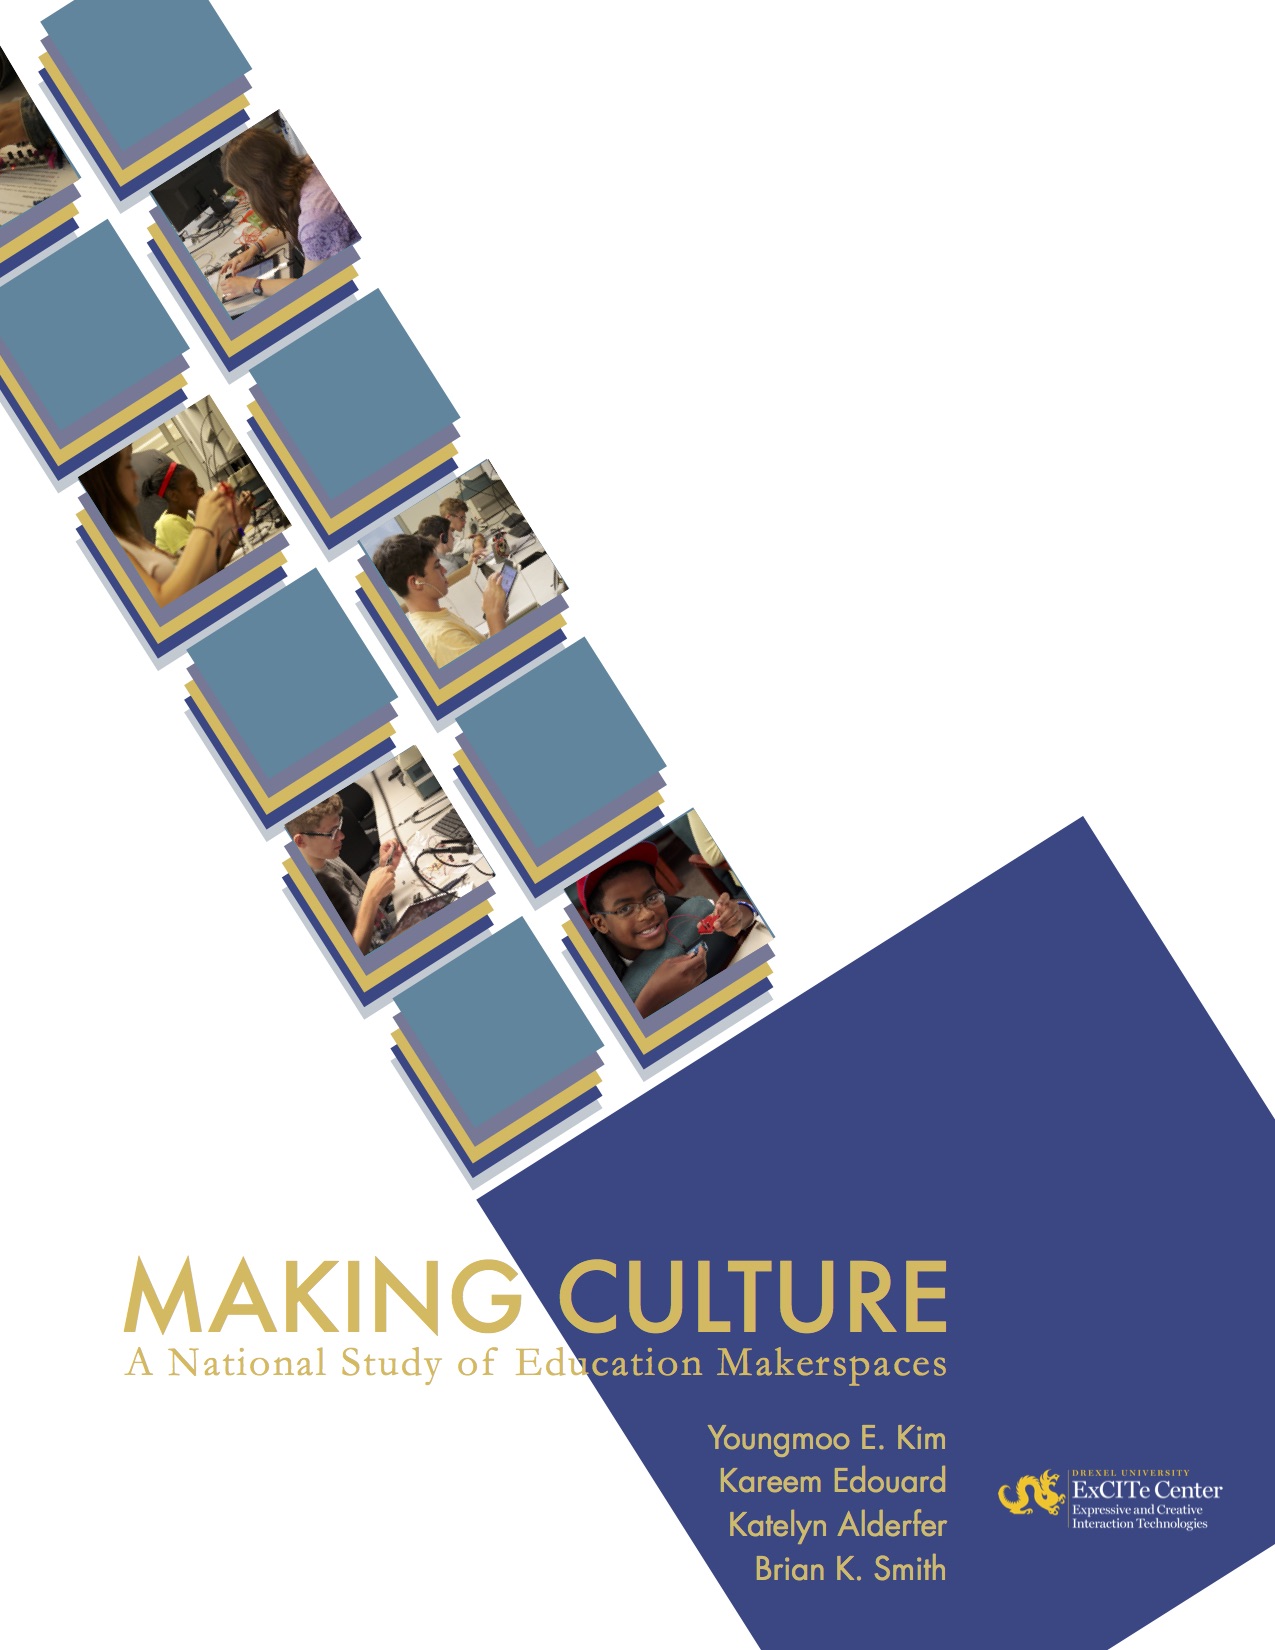 Making Culture Report thumbnail